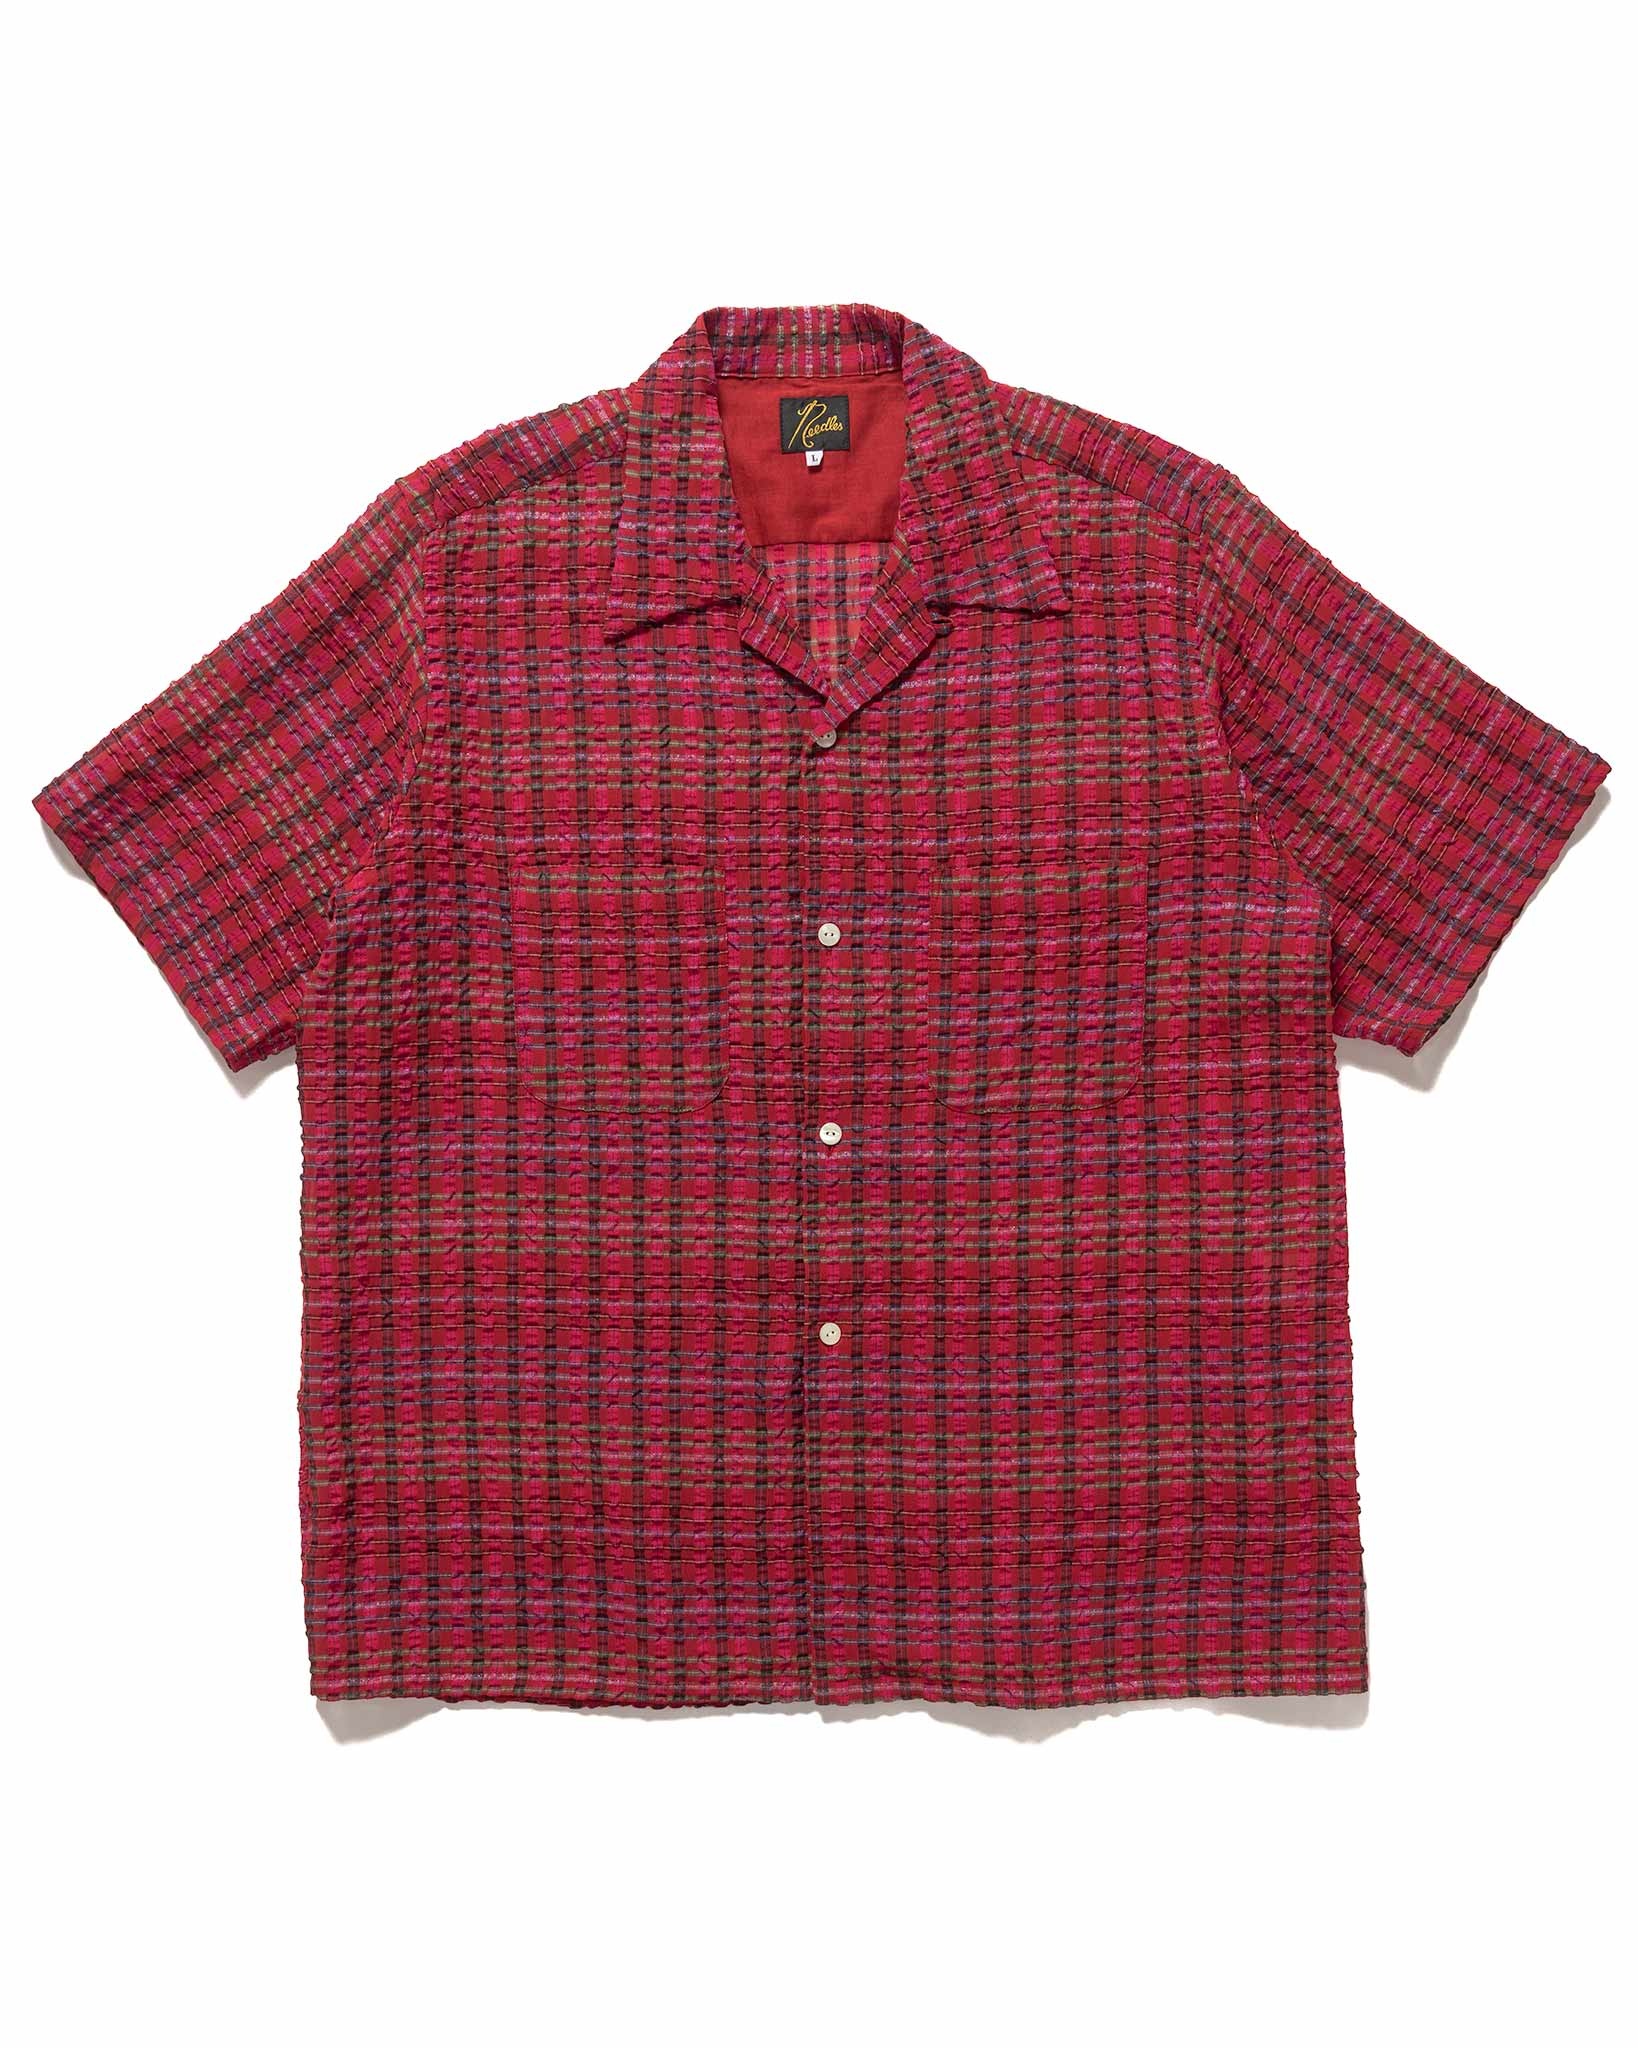 S/S One-Up Shirt - PE/R Chiffon Sucker Plaid Red - 1